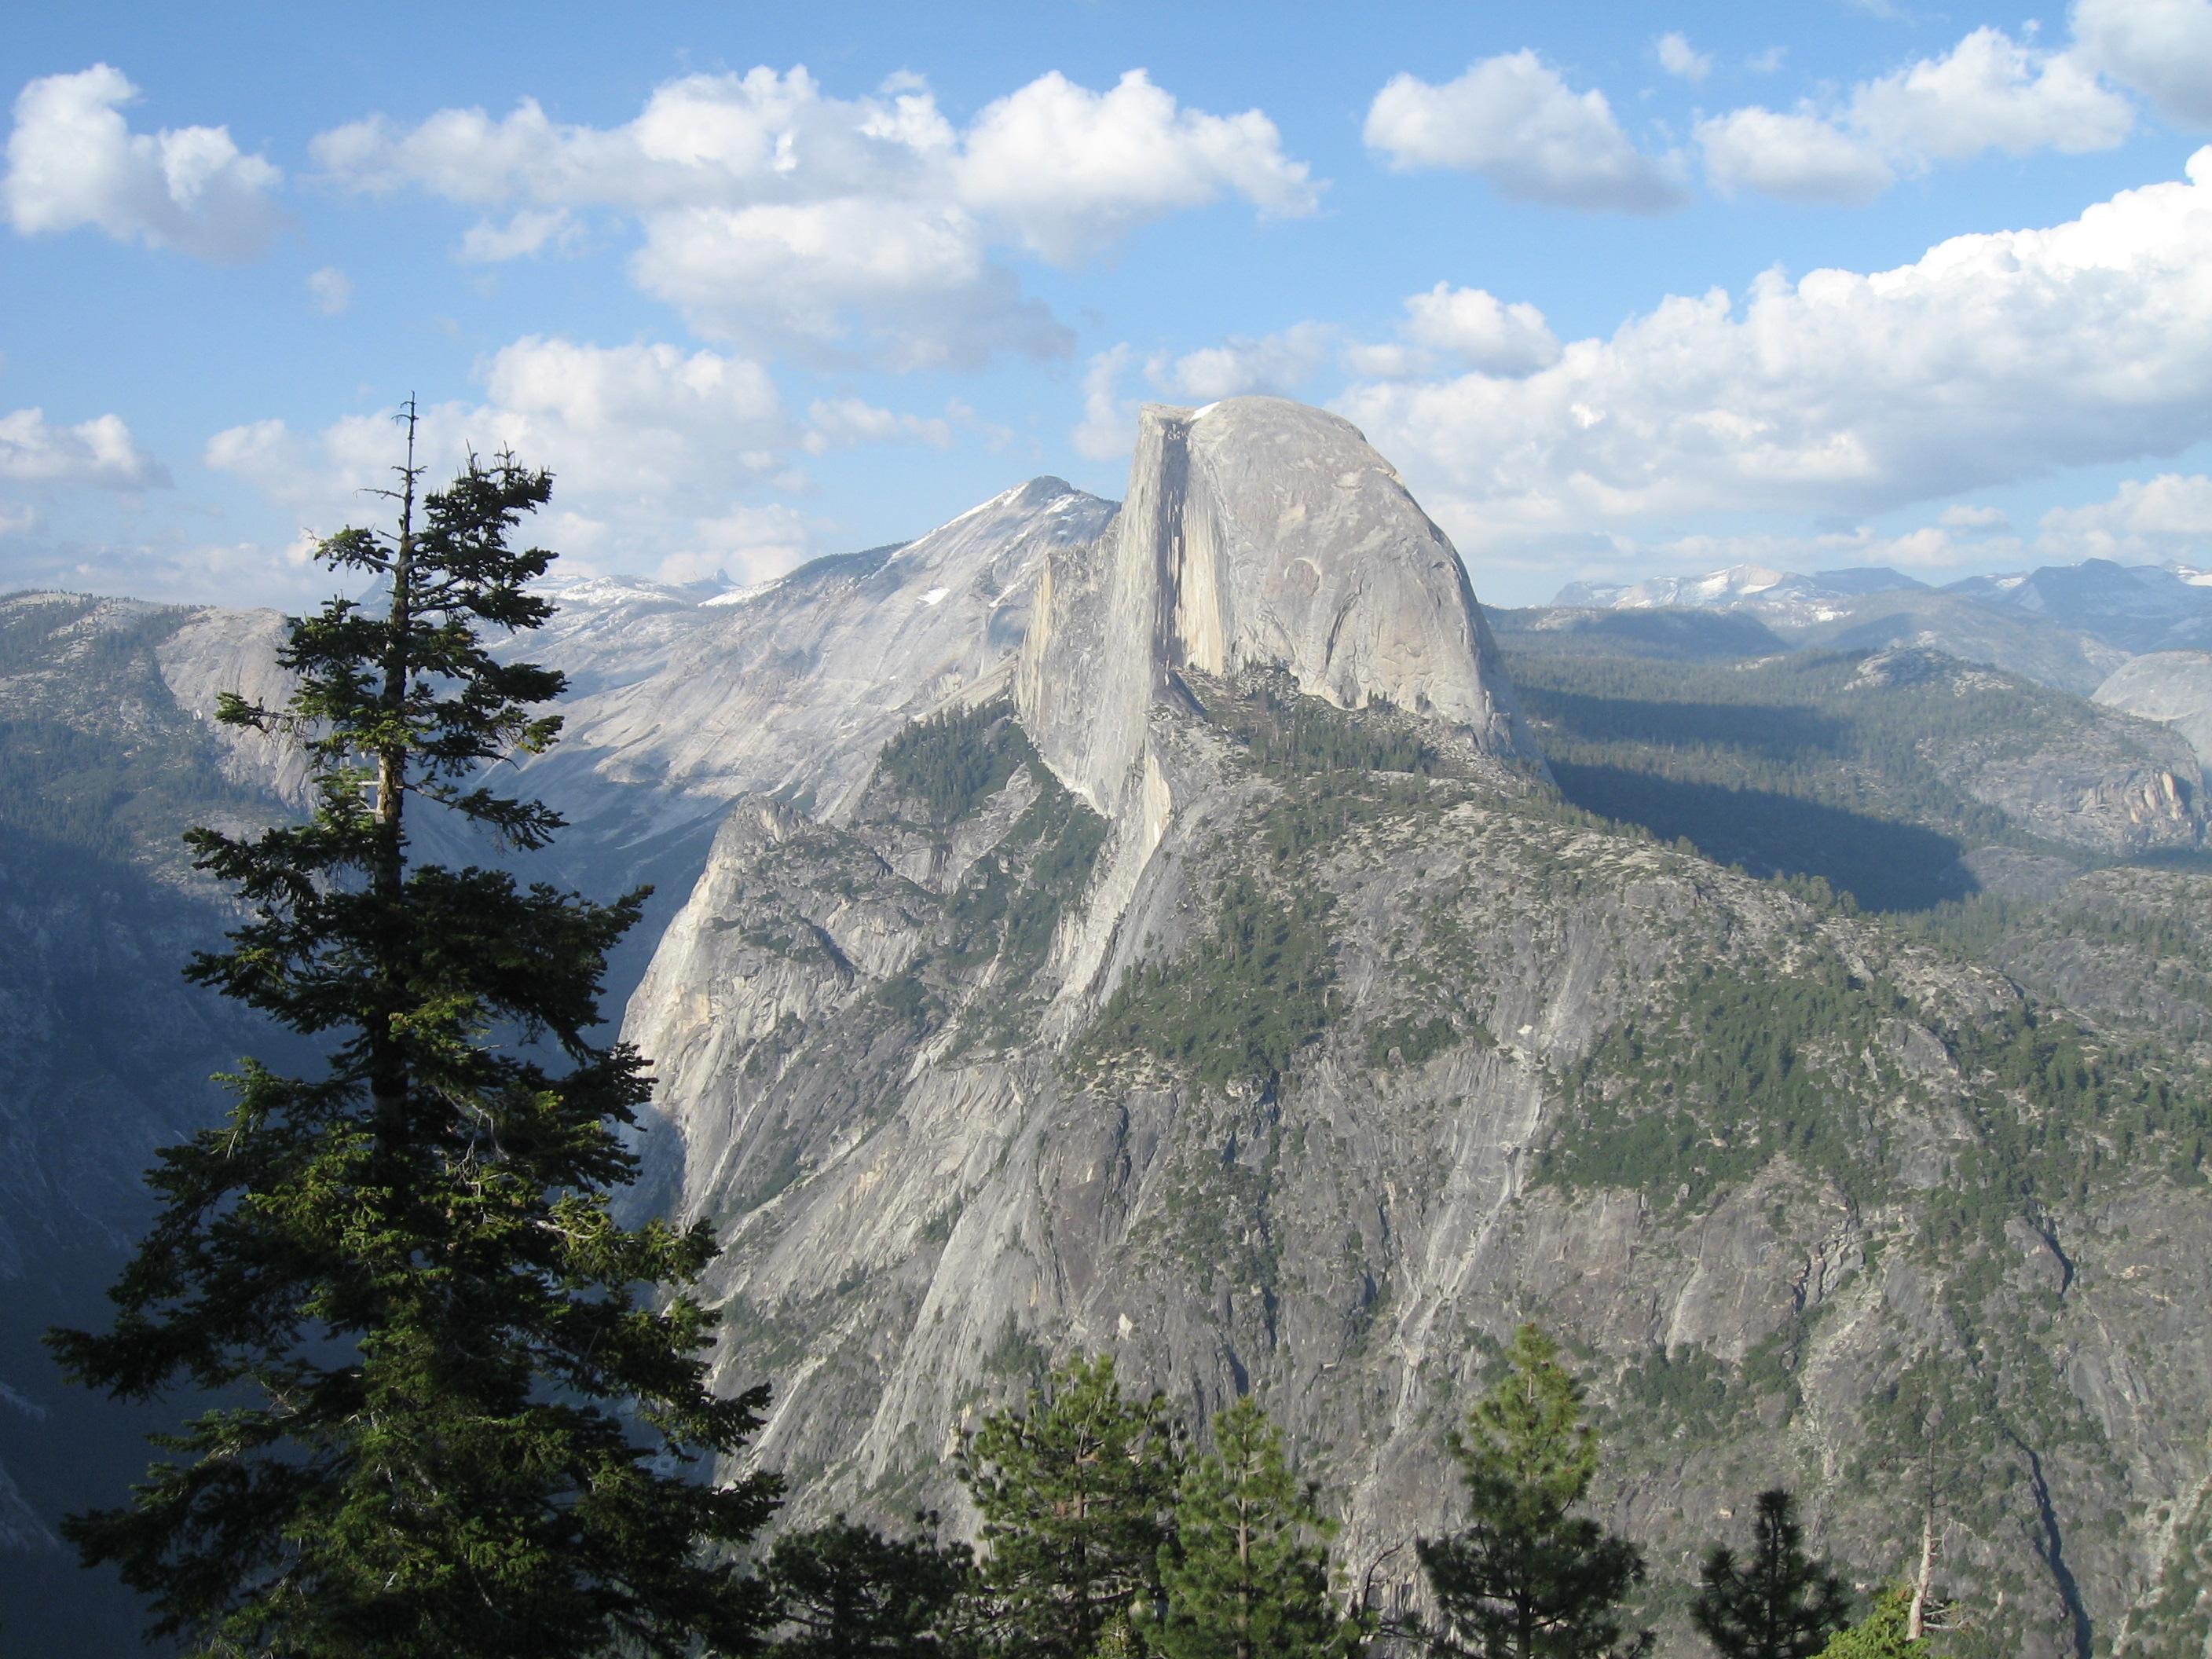 Yosemite Park California, - Glacier Point